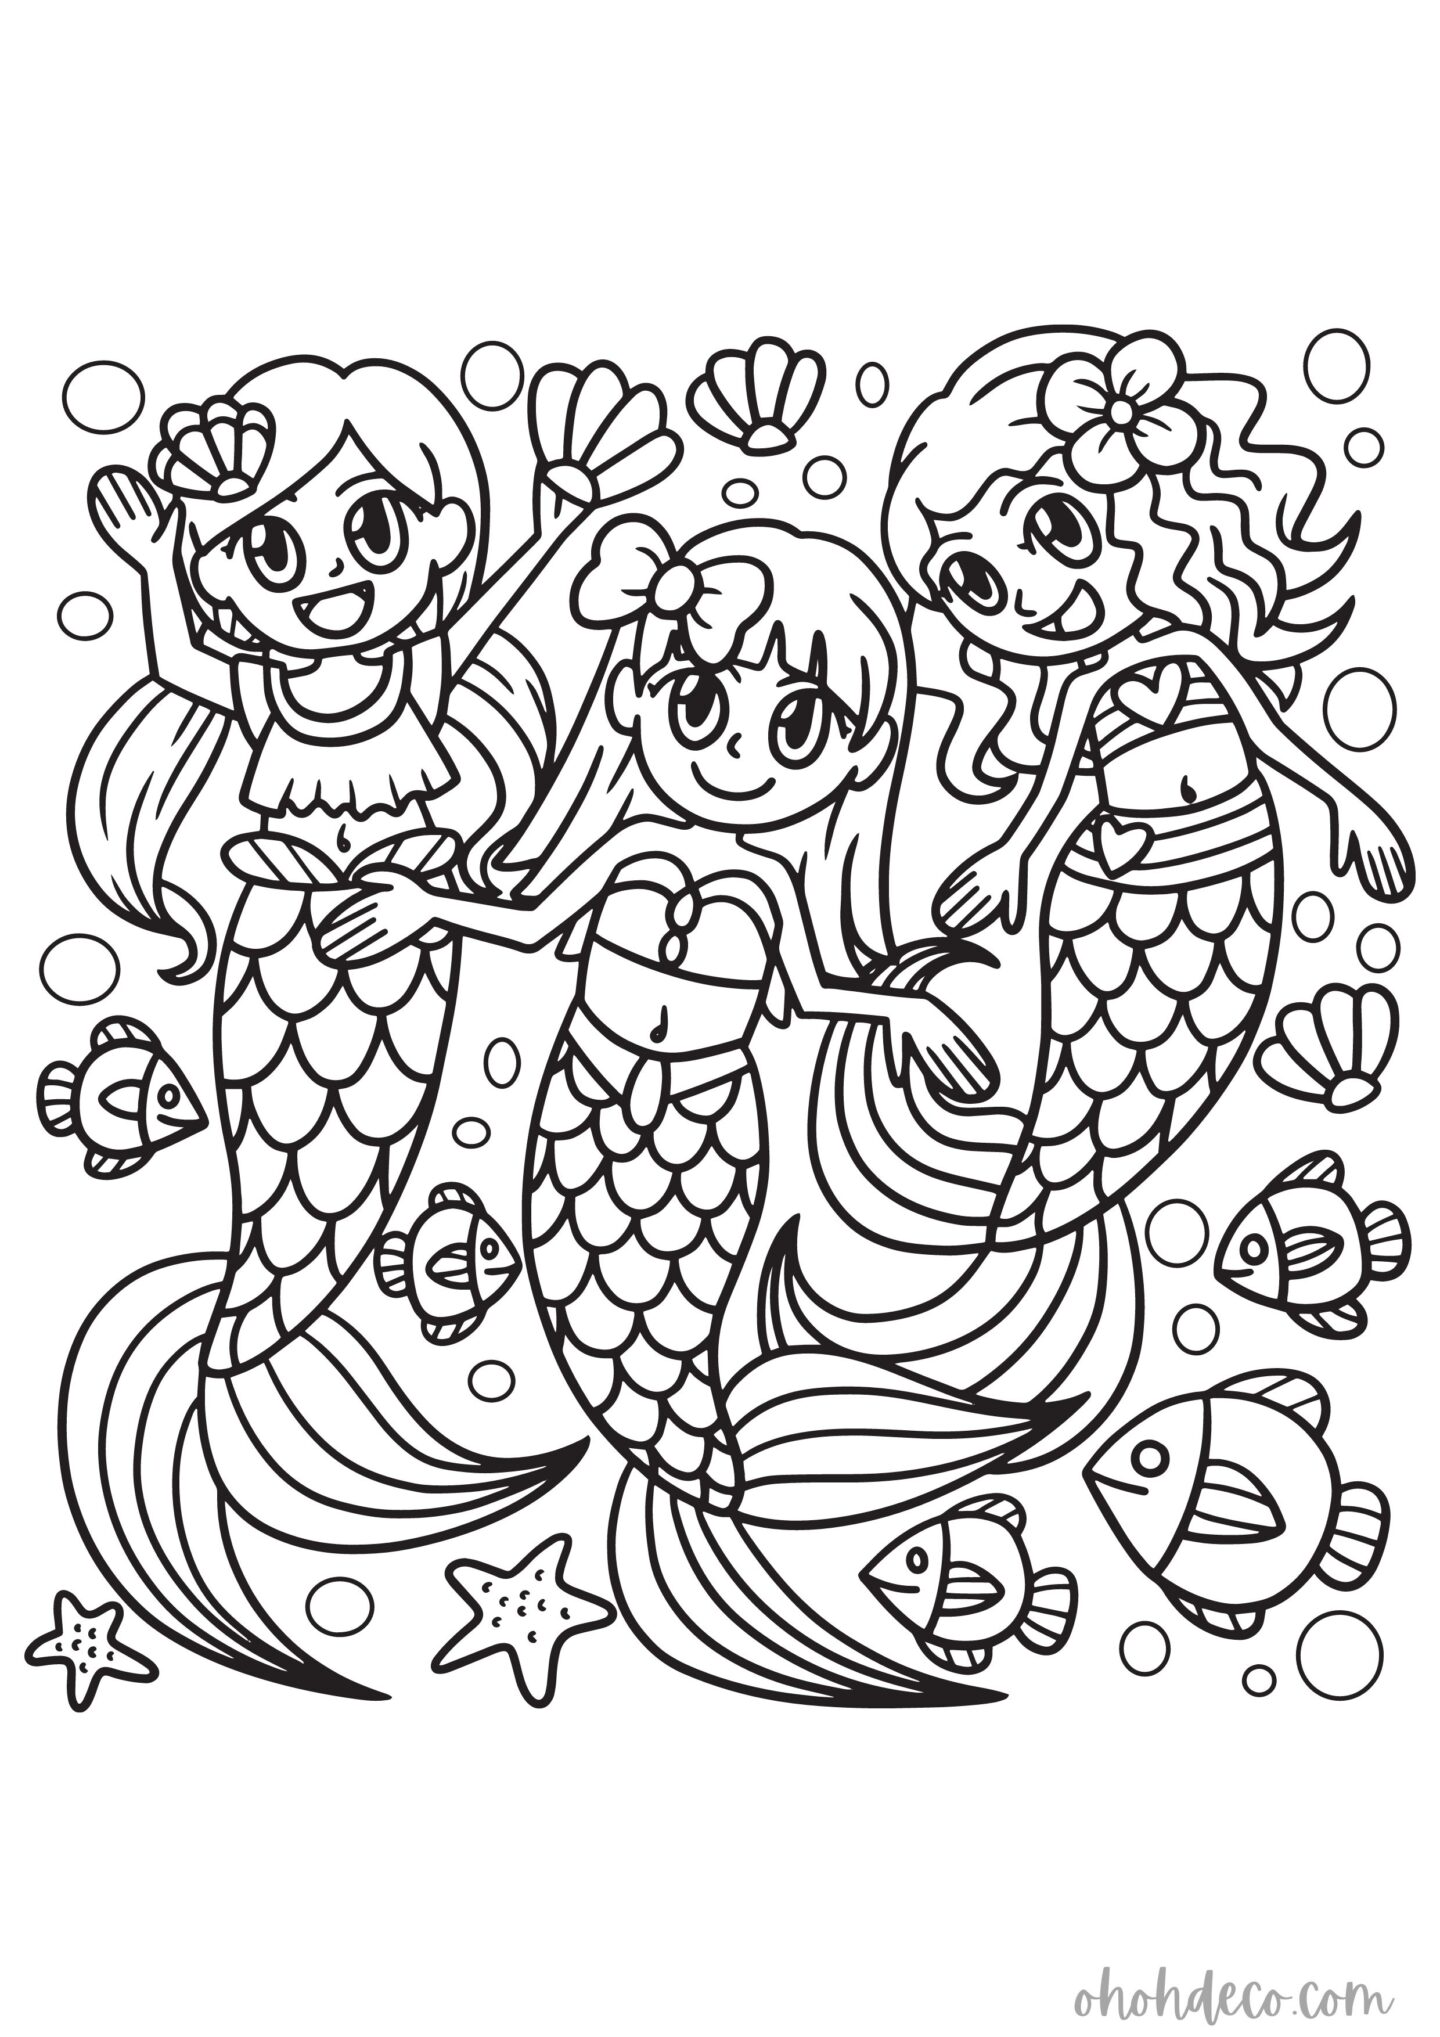 mermaids coloring page